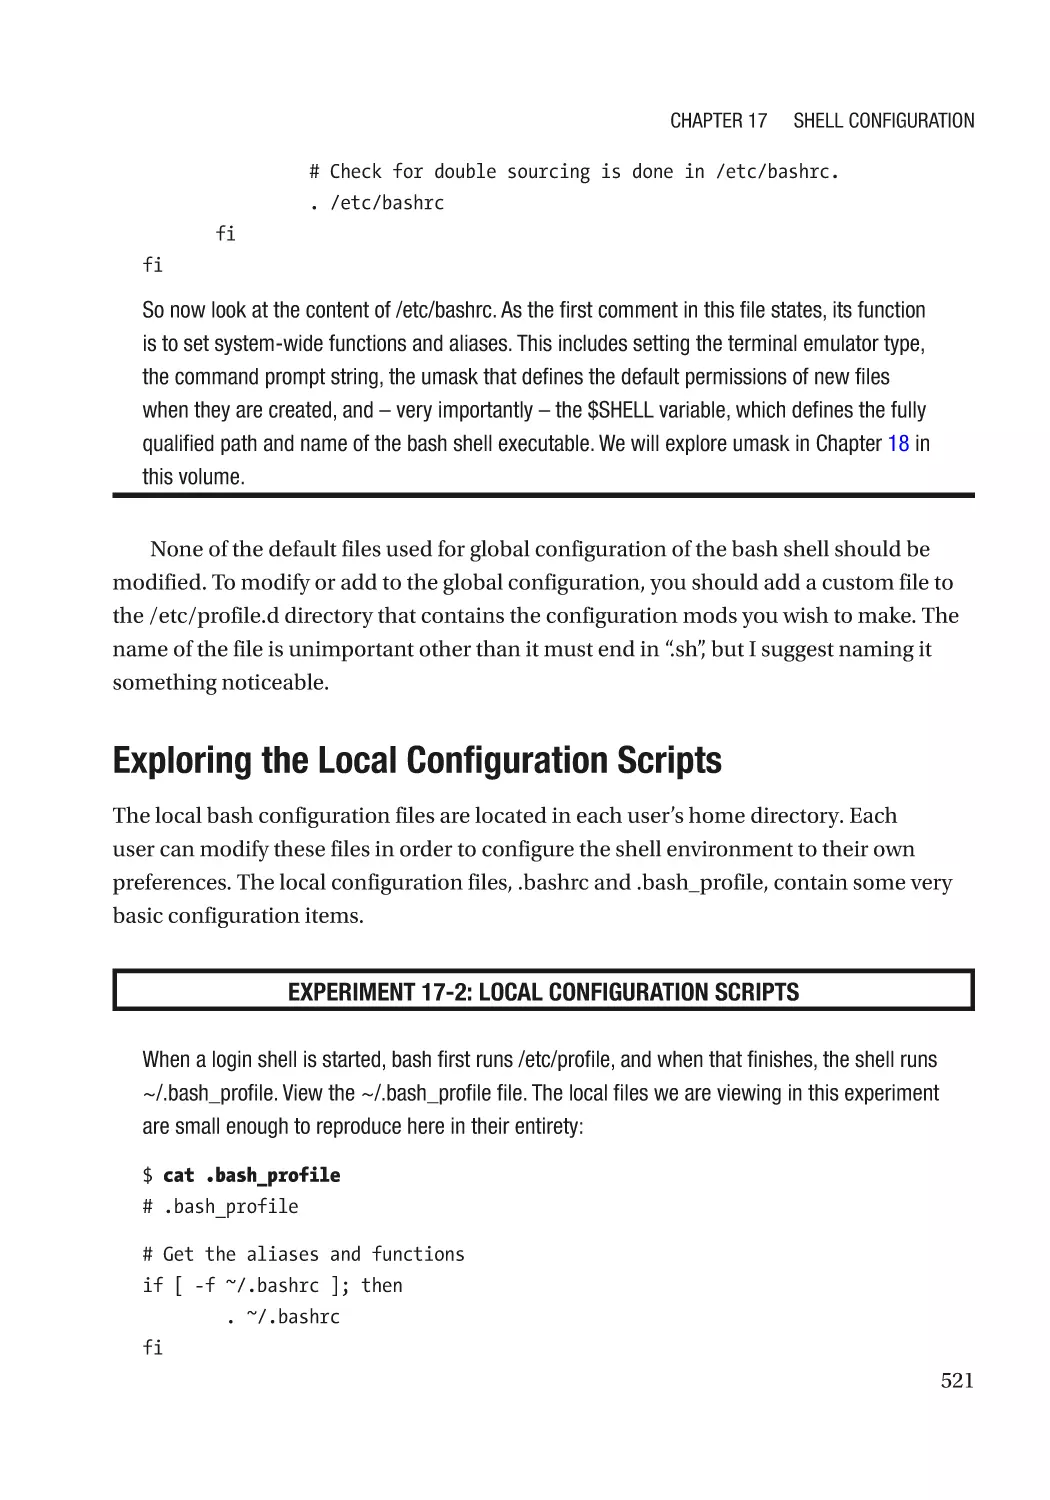 Exploring the Local Configuration Scripts